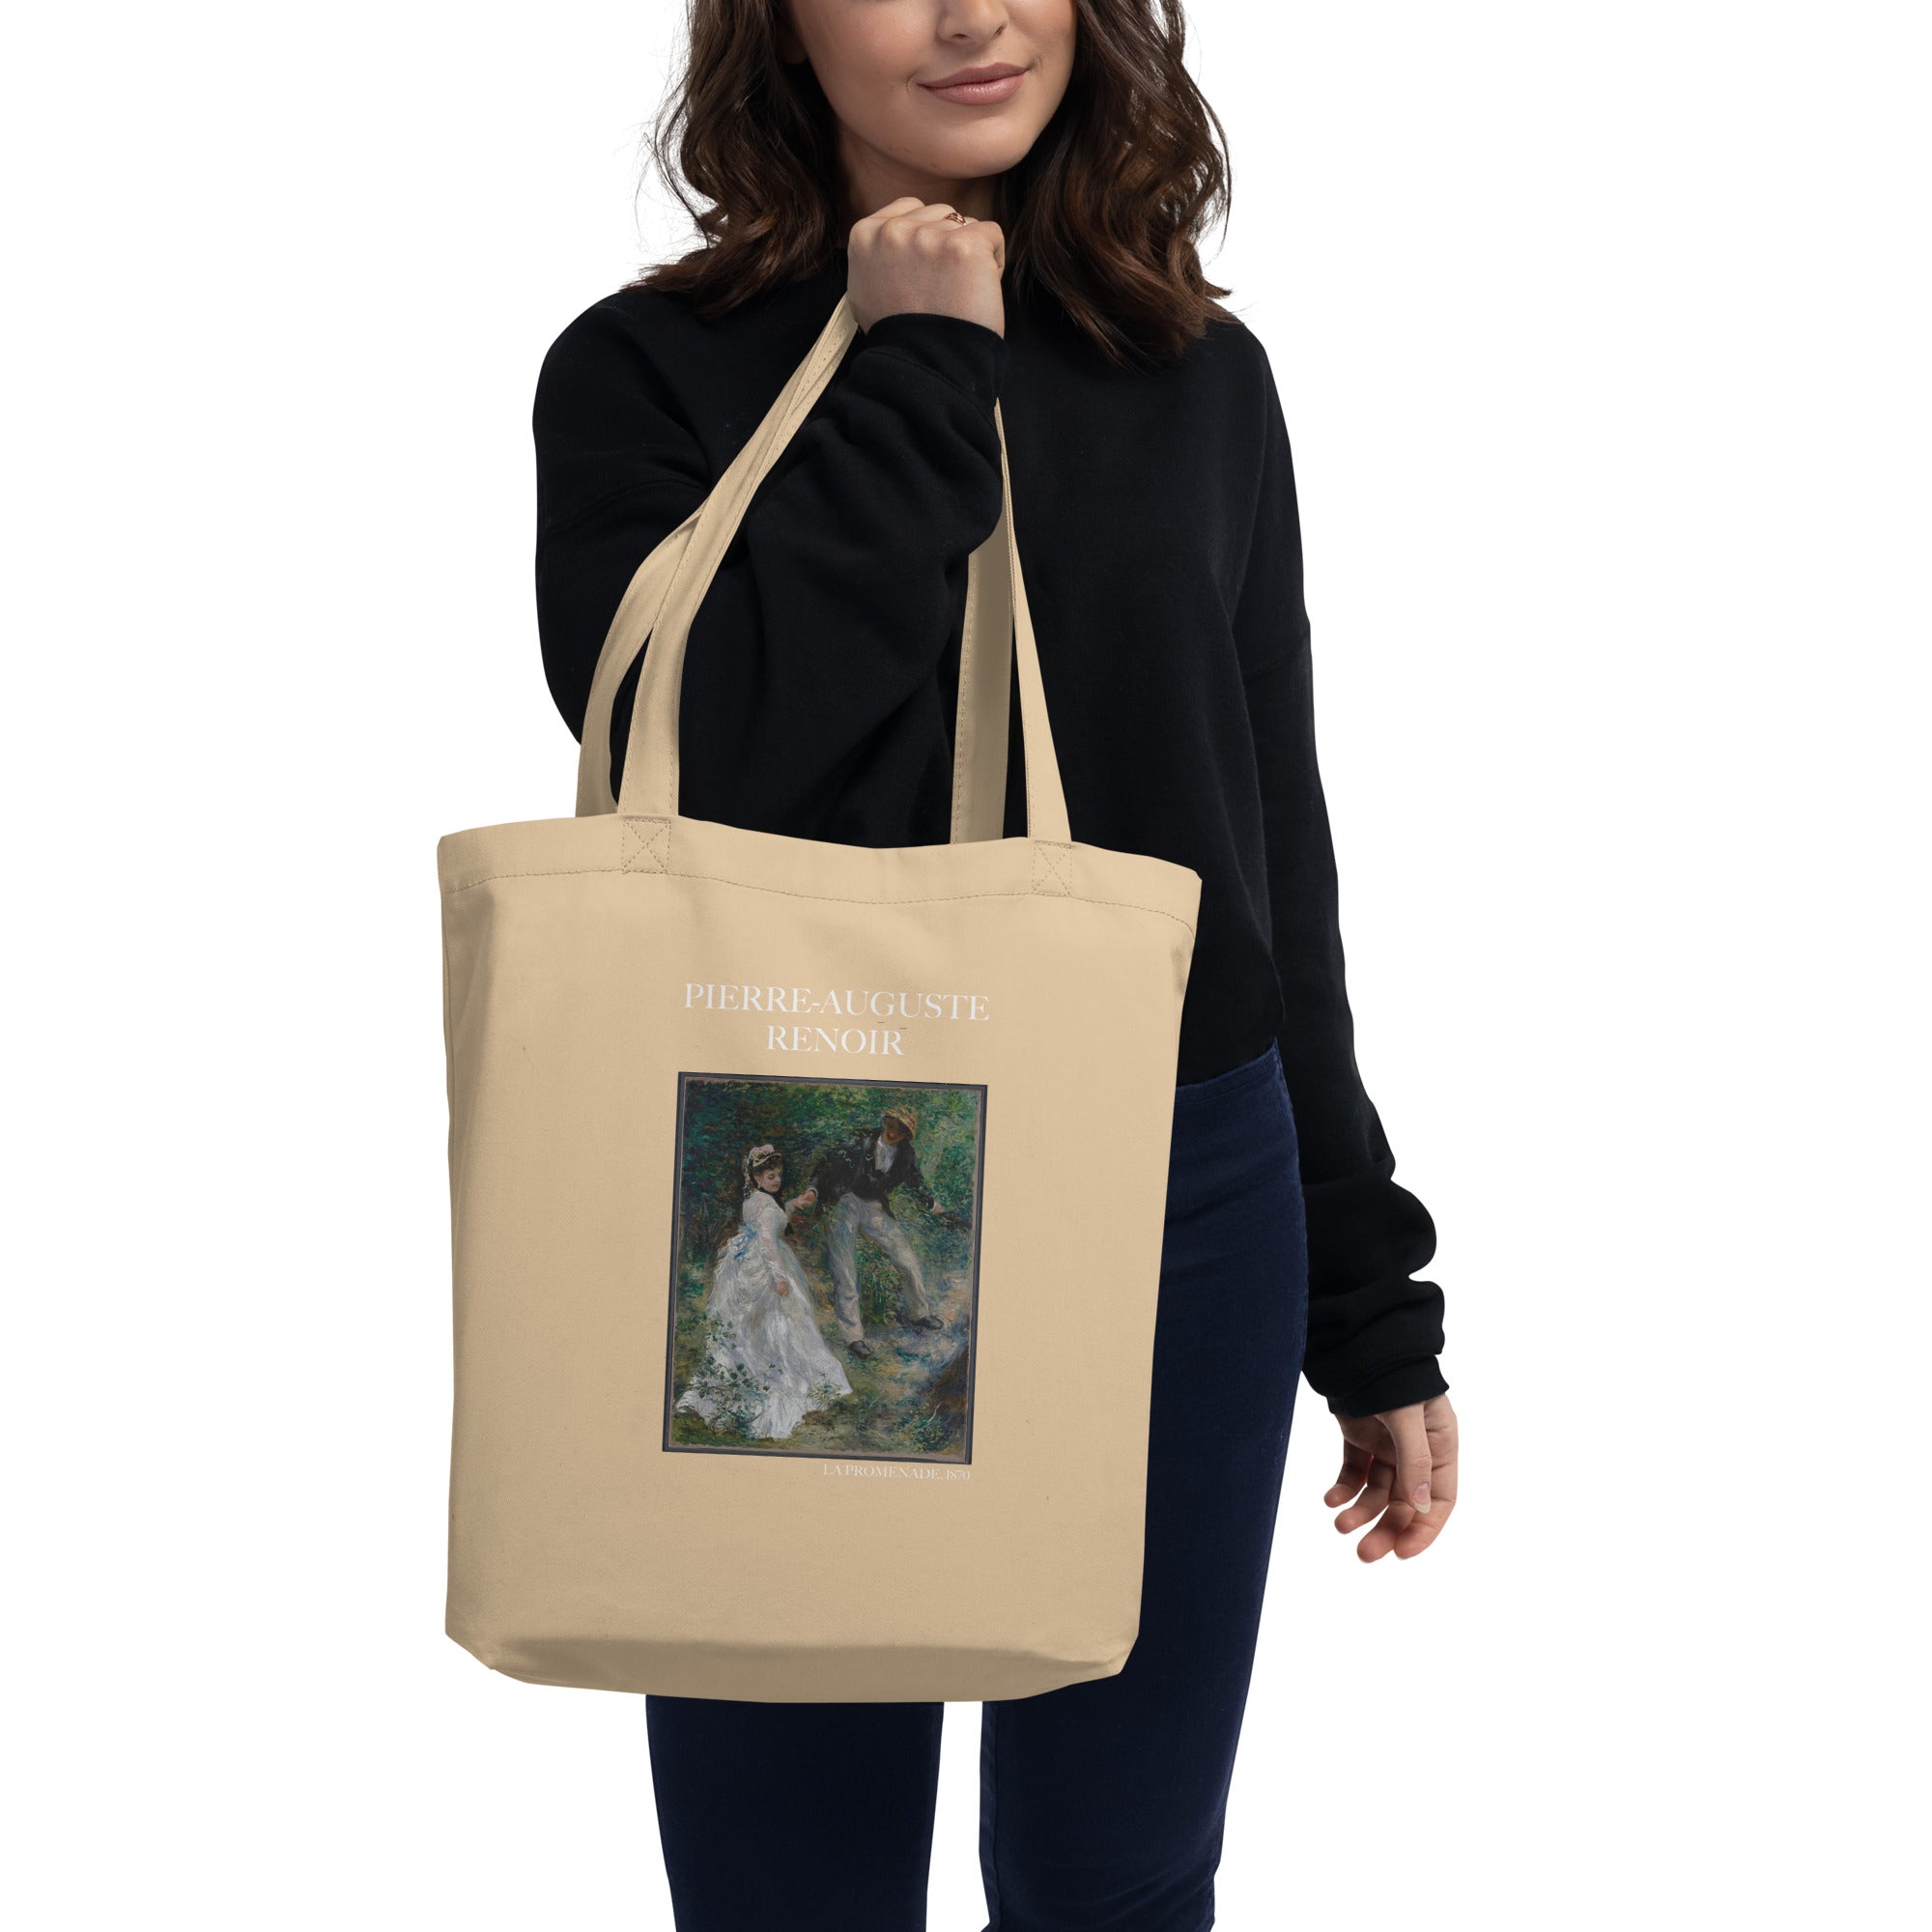 Pierre-Auguste Renoir 'La Promenade' Famous Painting Totebag | Eco Friendly Art Tote Bag